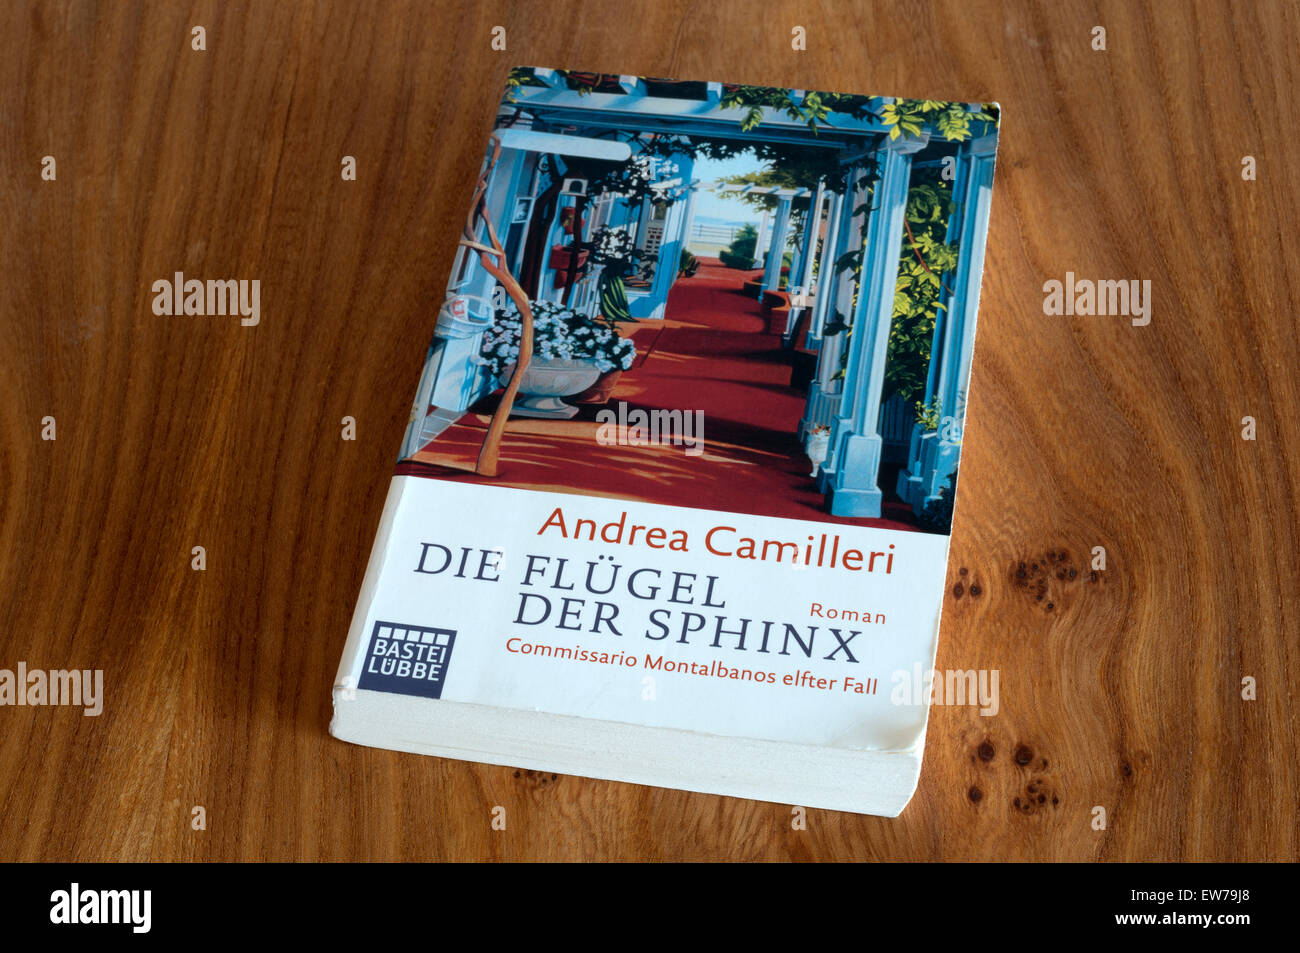 Andrea Camilleri Die Flugel Der Sphinx paperback book Stock Photo